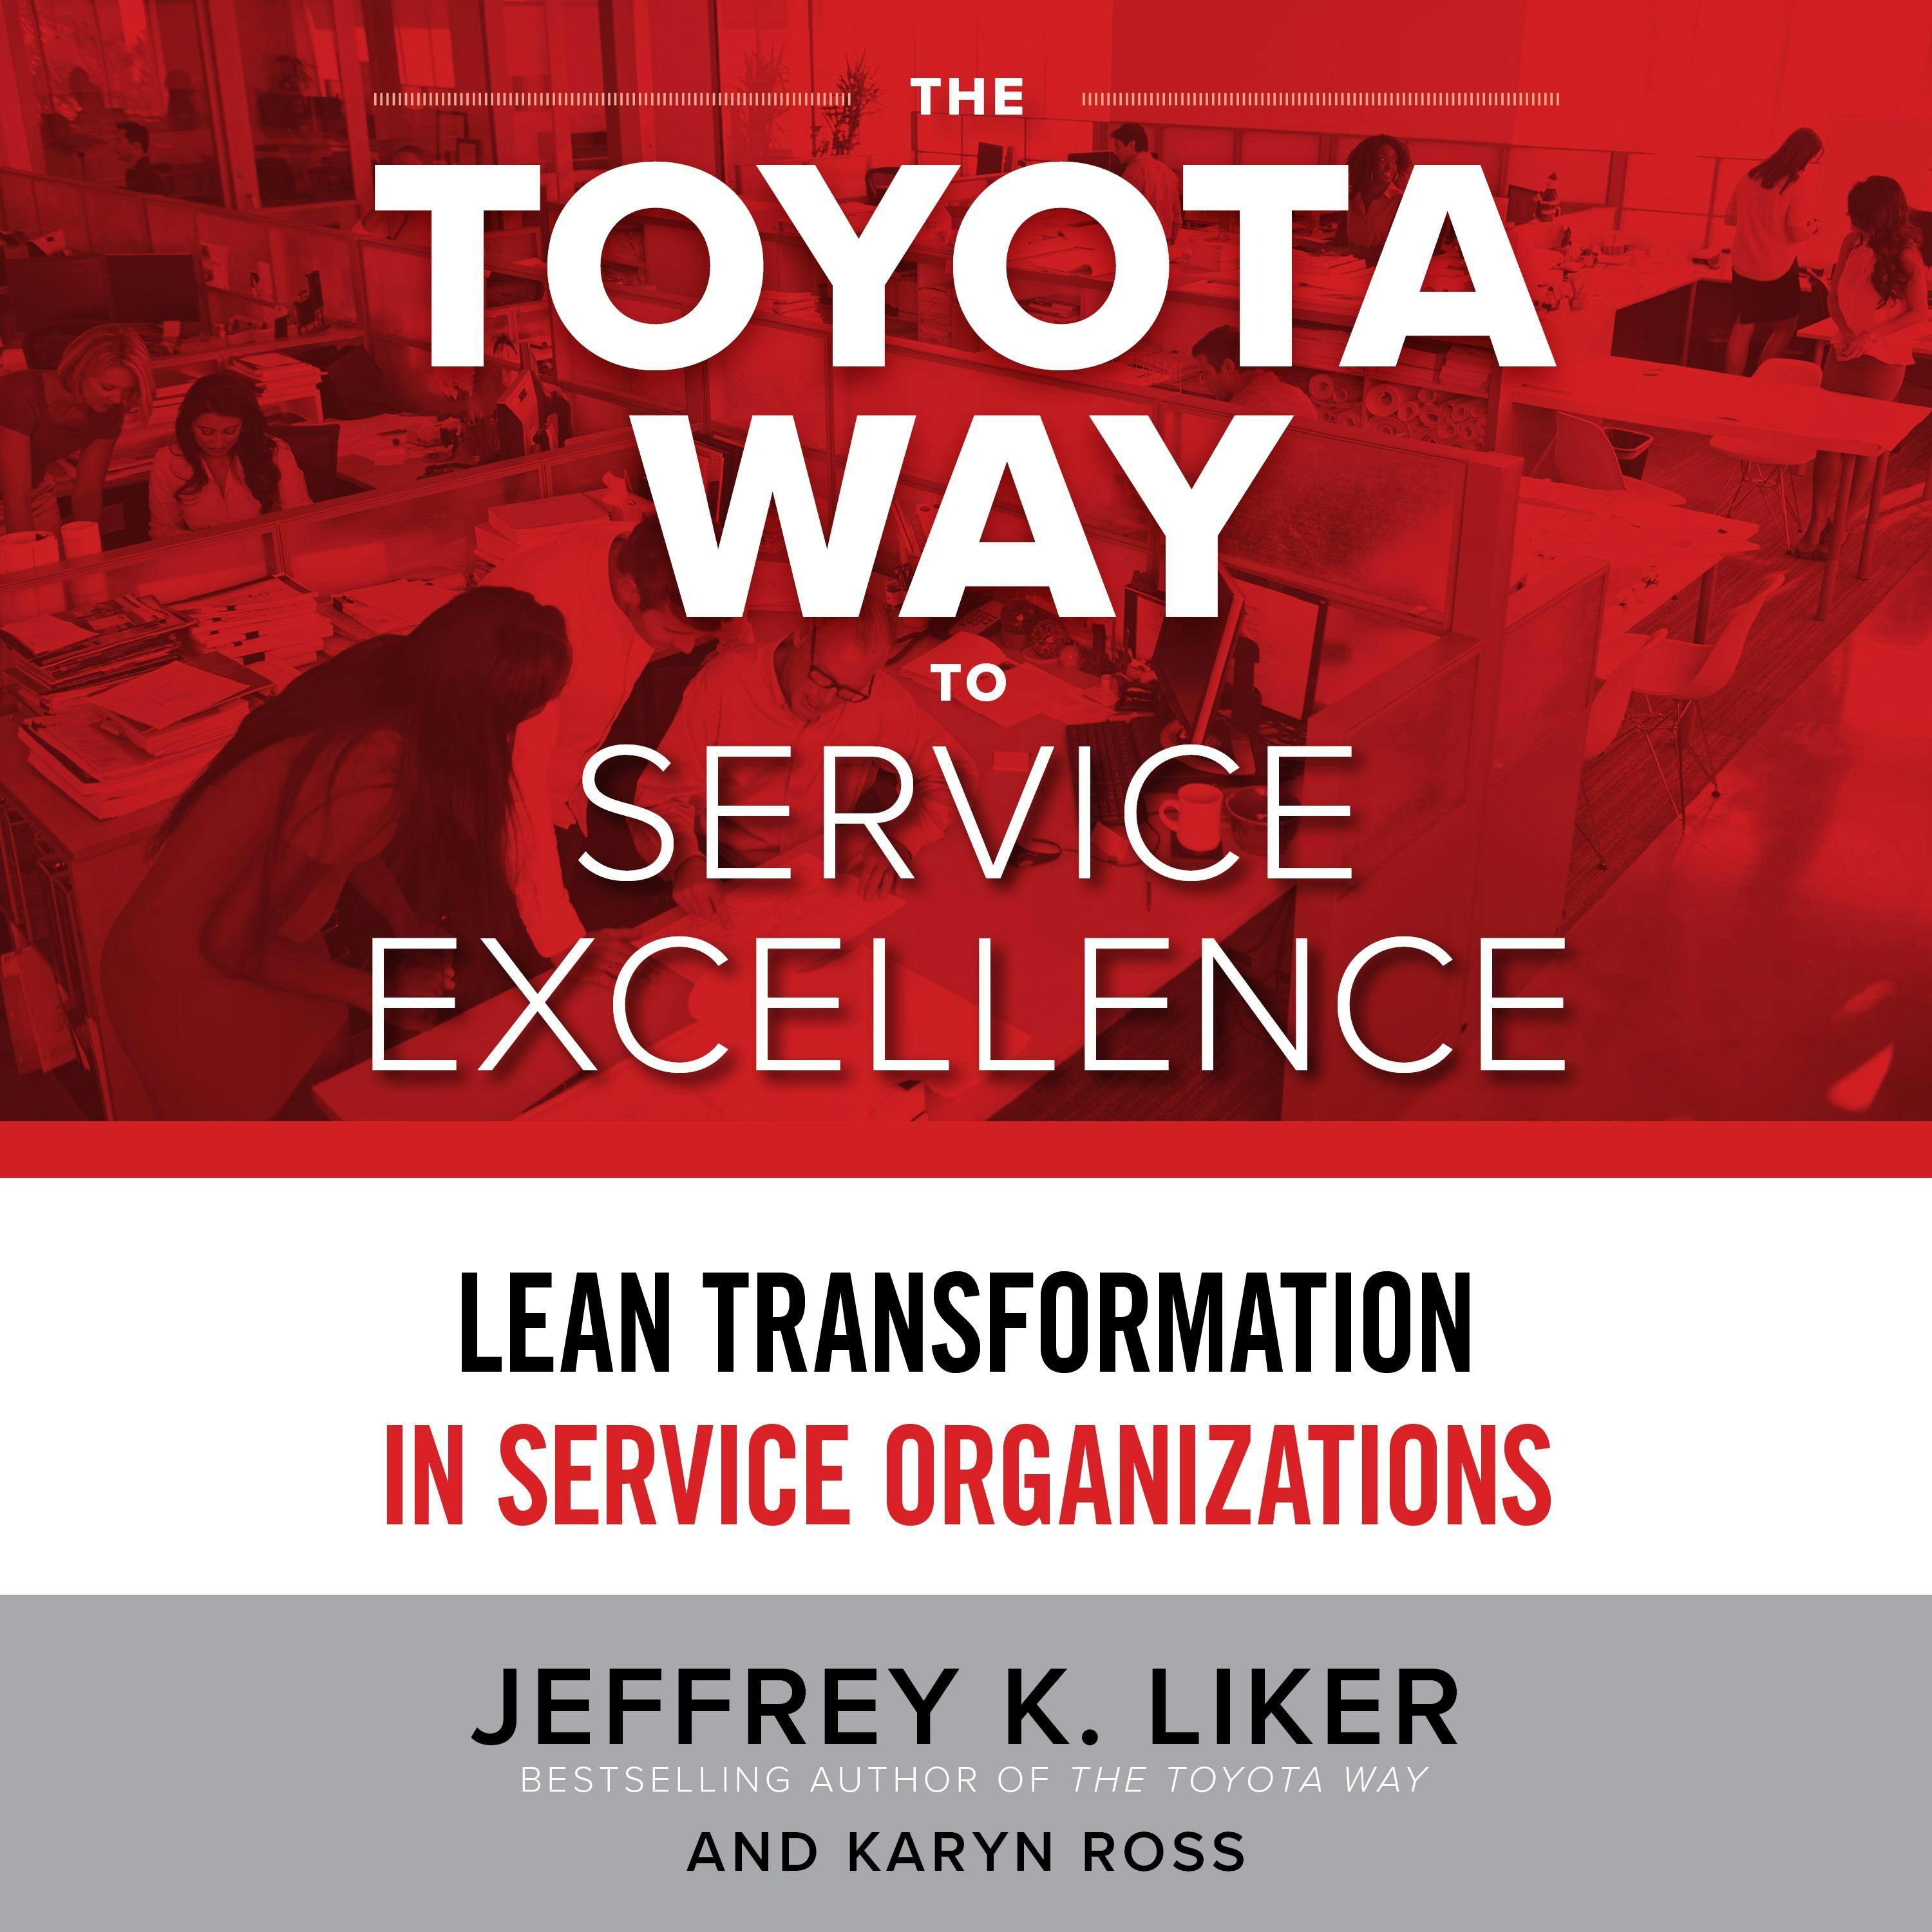 The Toyota Way to Service Excellence: Lean Transformation in Service Organizations - Karyn Ross, Jeffrey K. Liker